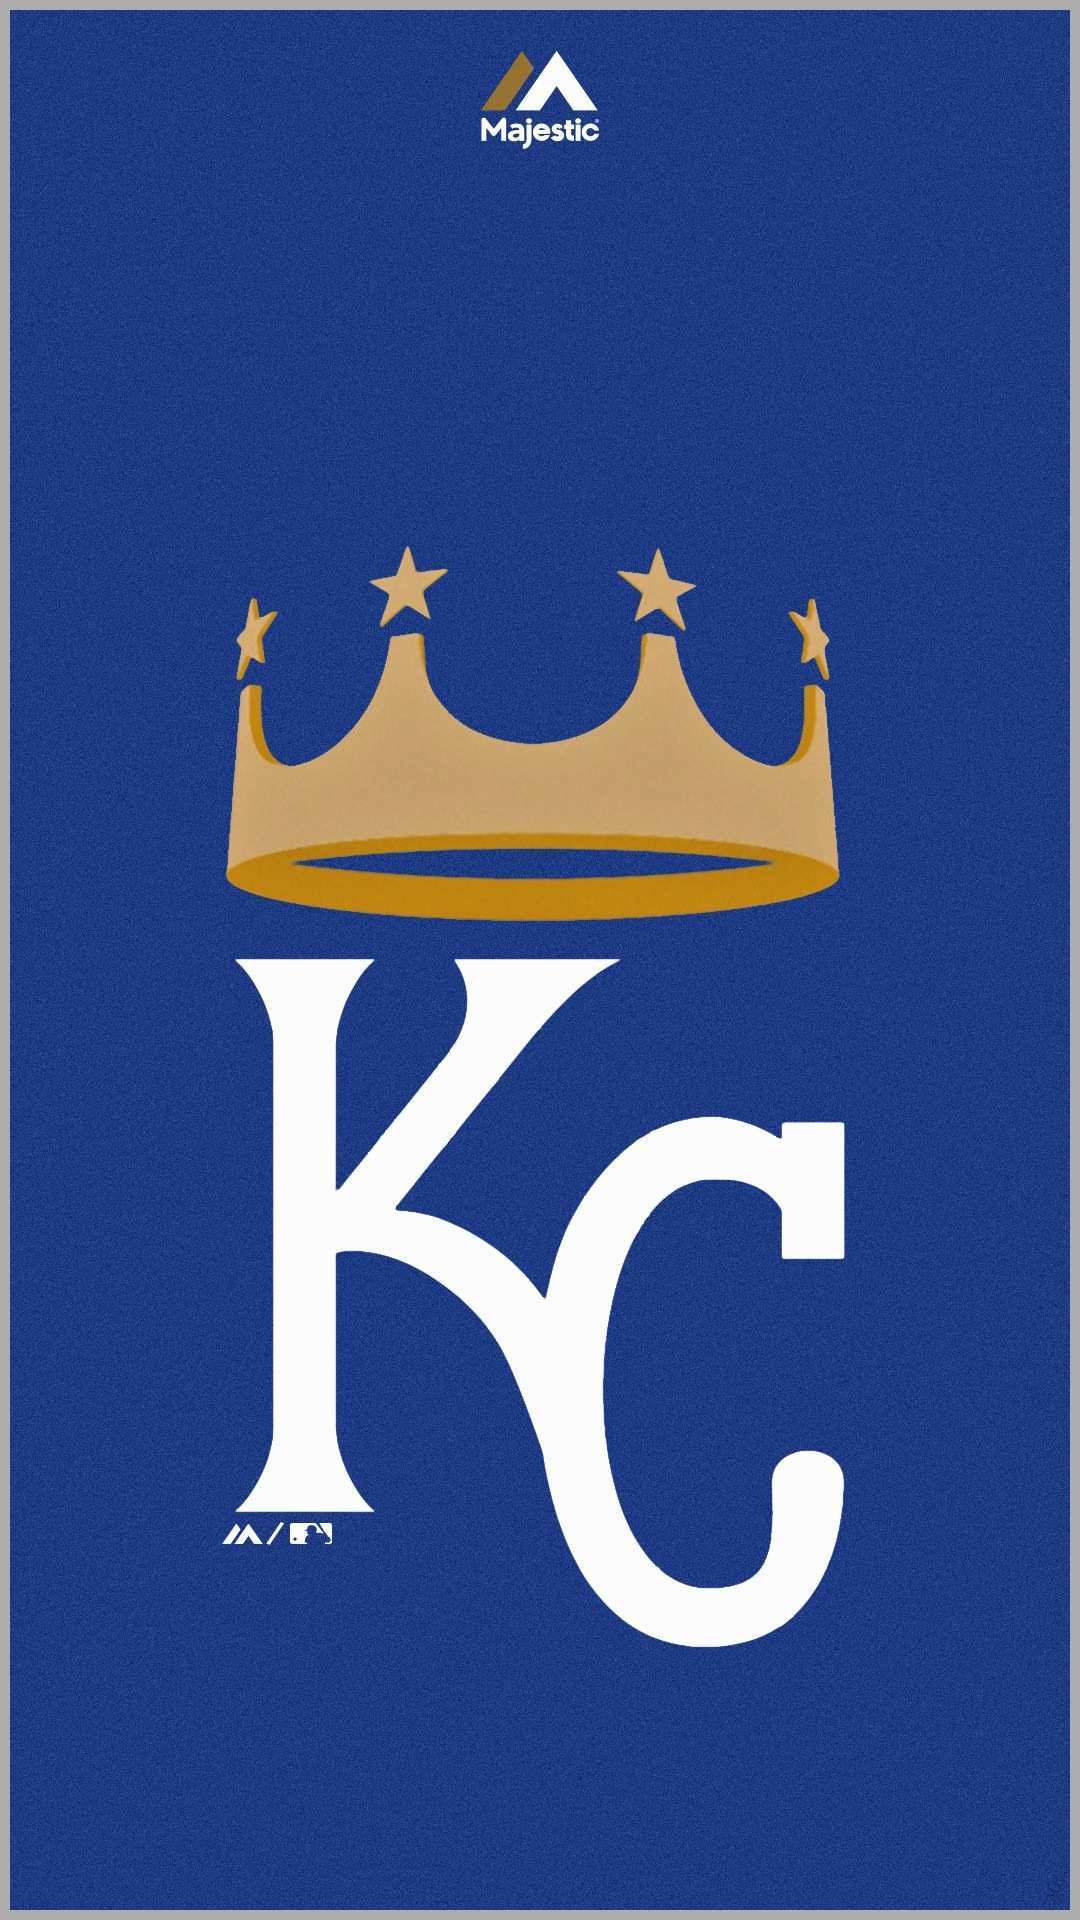 Kansas City Royals Wallpaper 2018 76 images